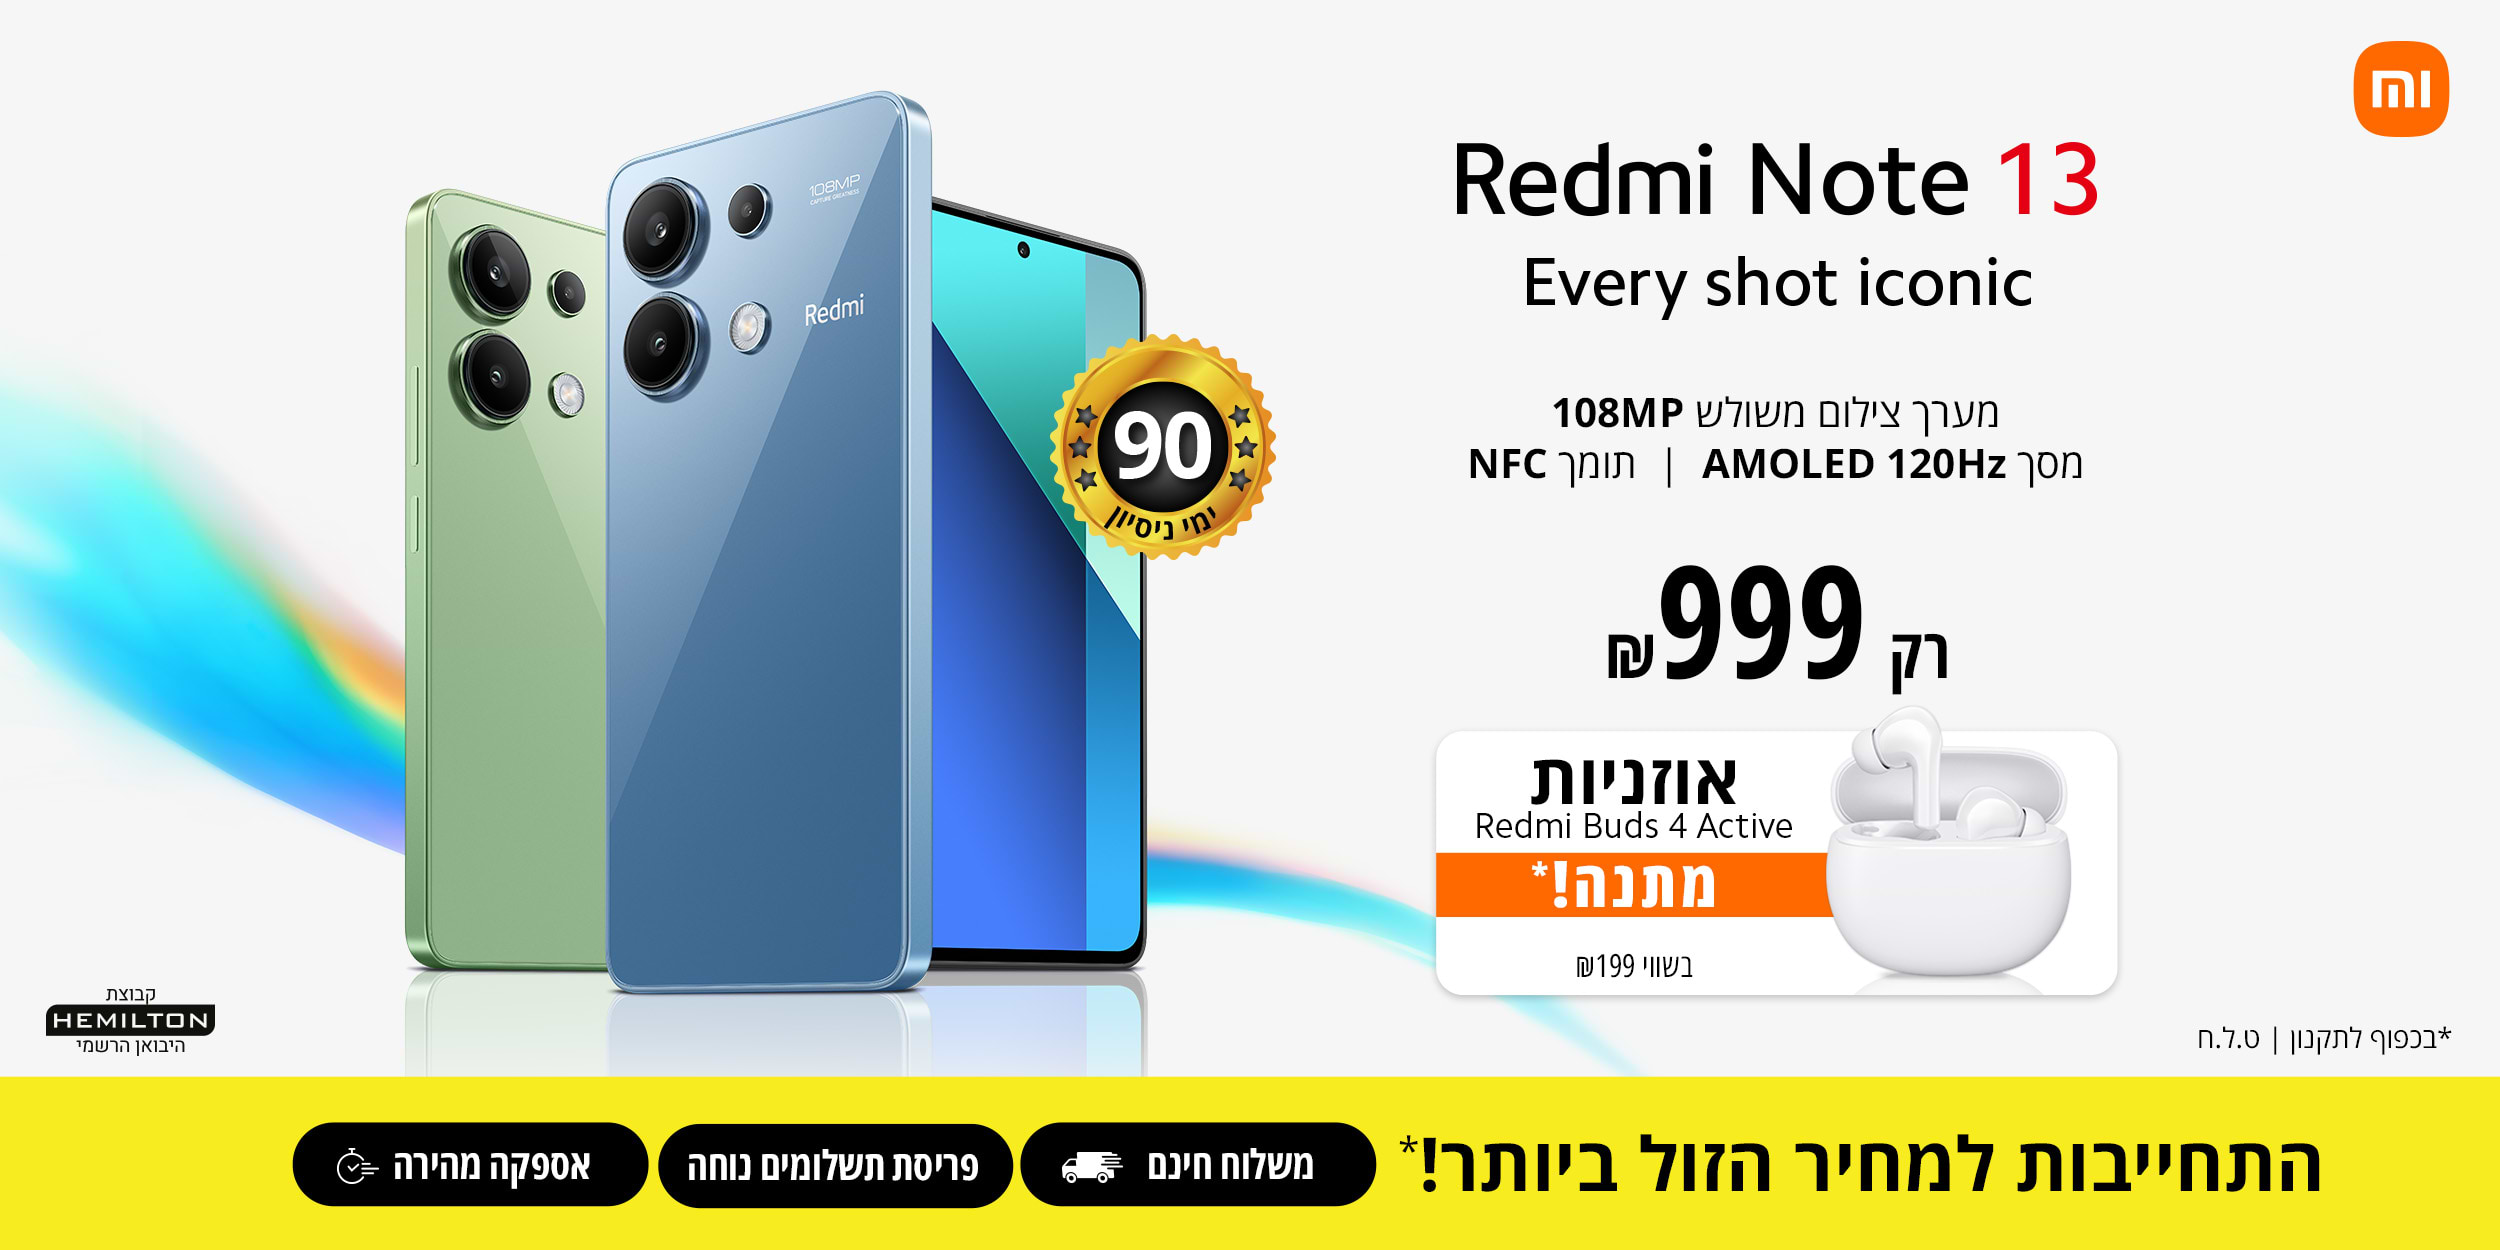 Redmi Note 13 Every shot iconic מערך צילום משלוש 108MP, מסך AMOLED 120Hz, תומך NFC. רק 999 ש